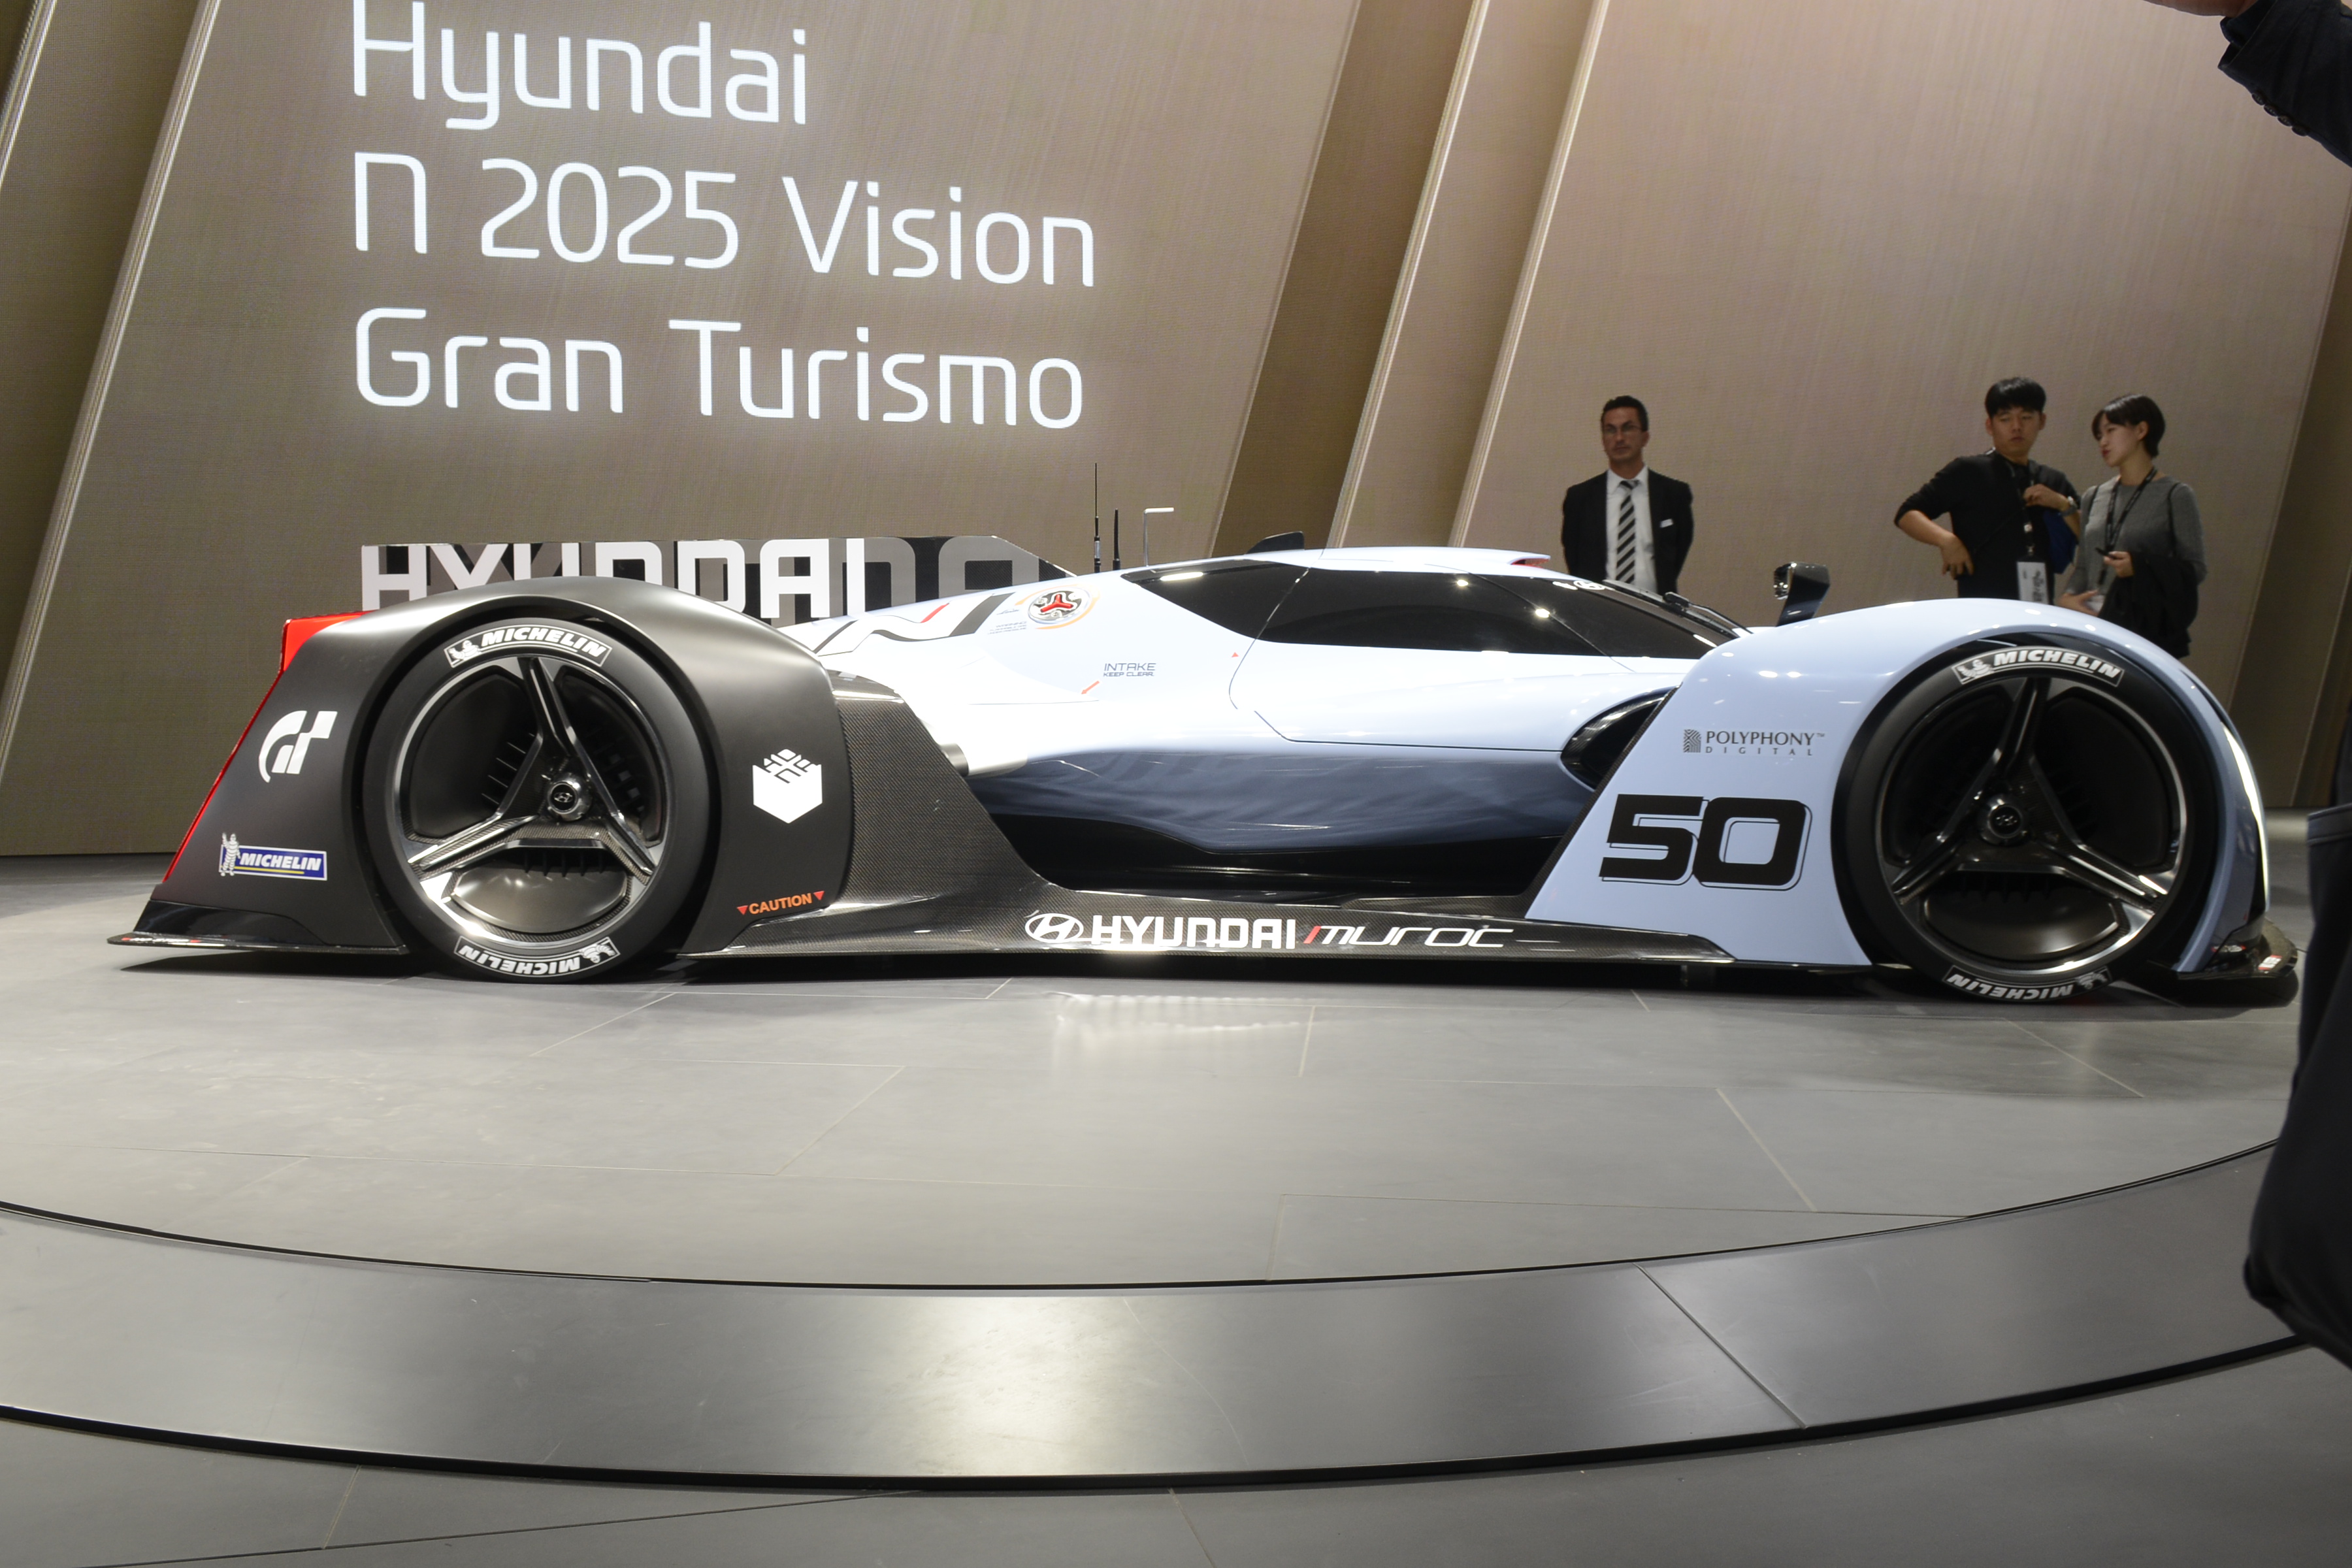 Hyundai N 2025 Vision Gran Turismo (side)